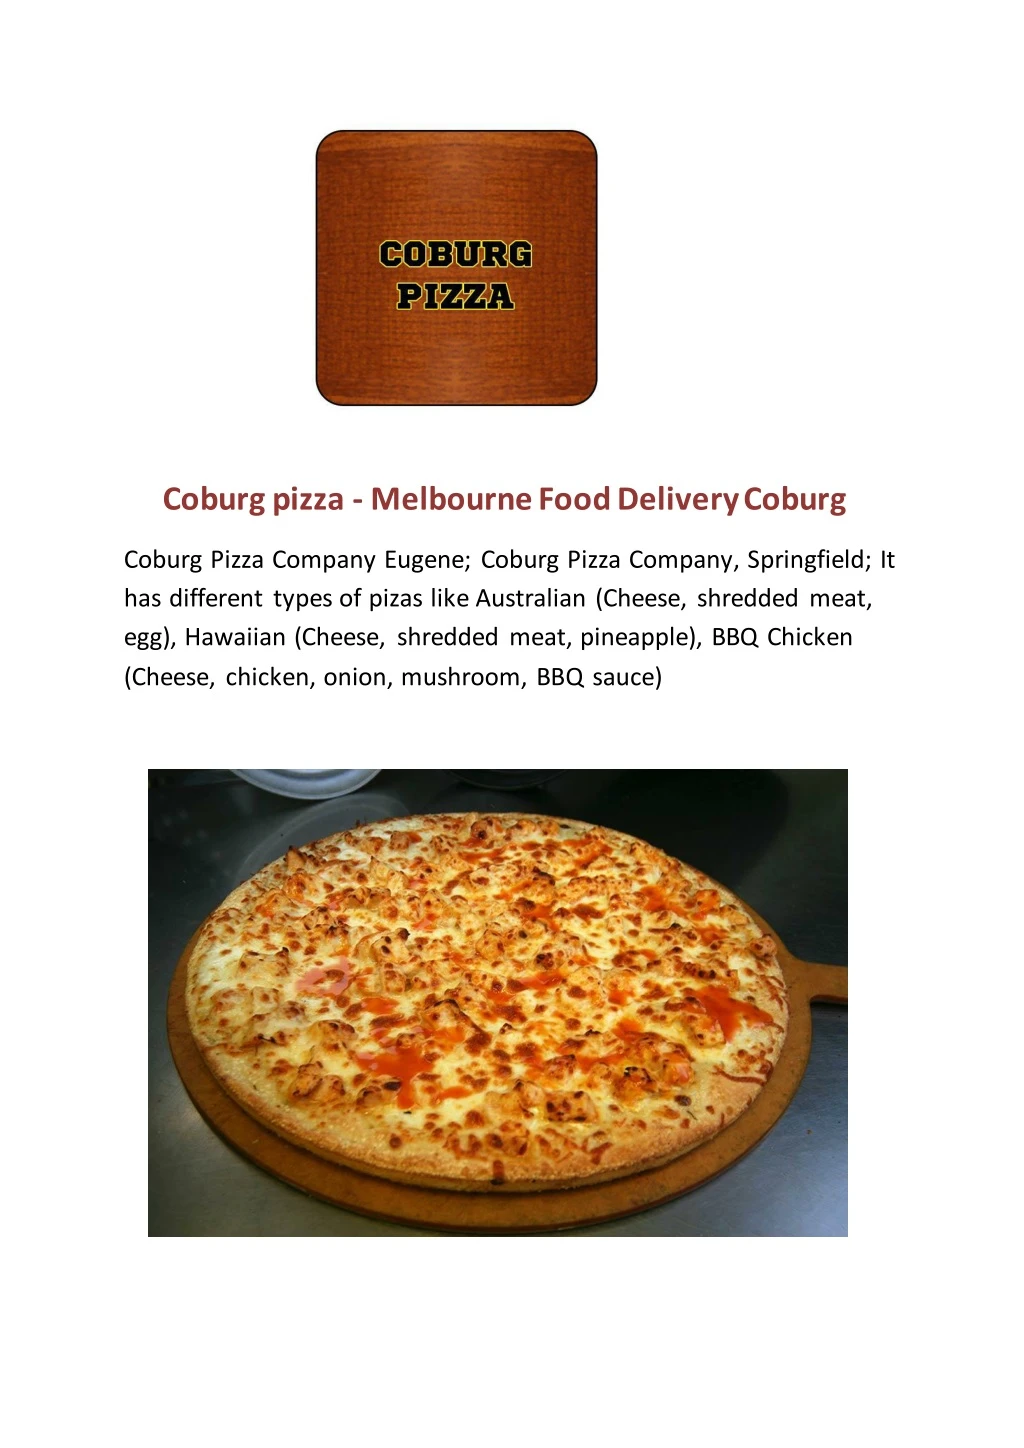 coburg pizza melbourne food delivery coburg